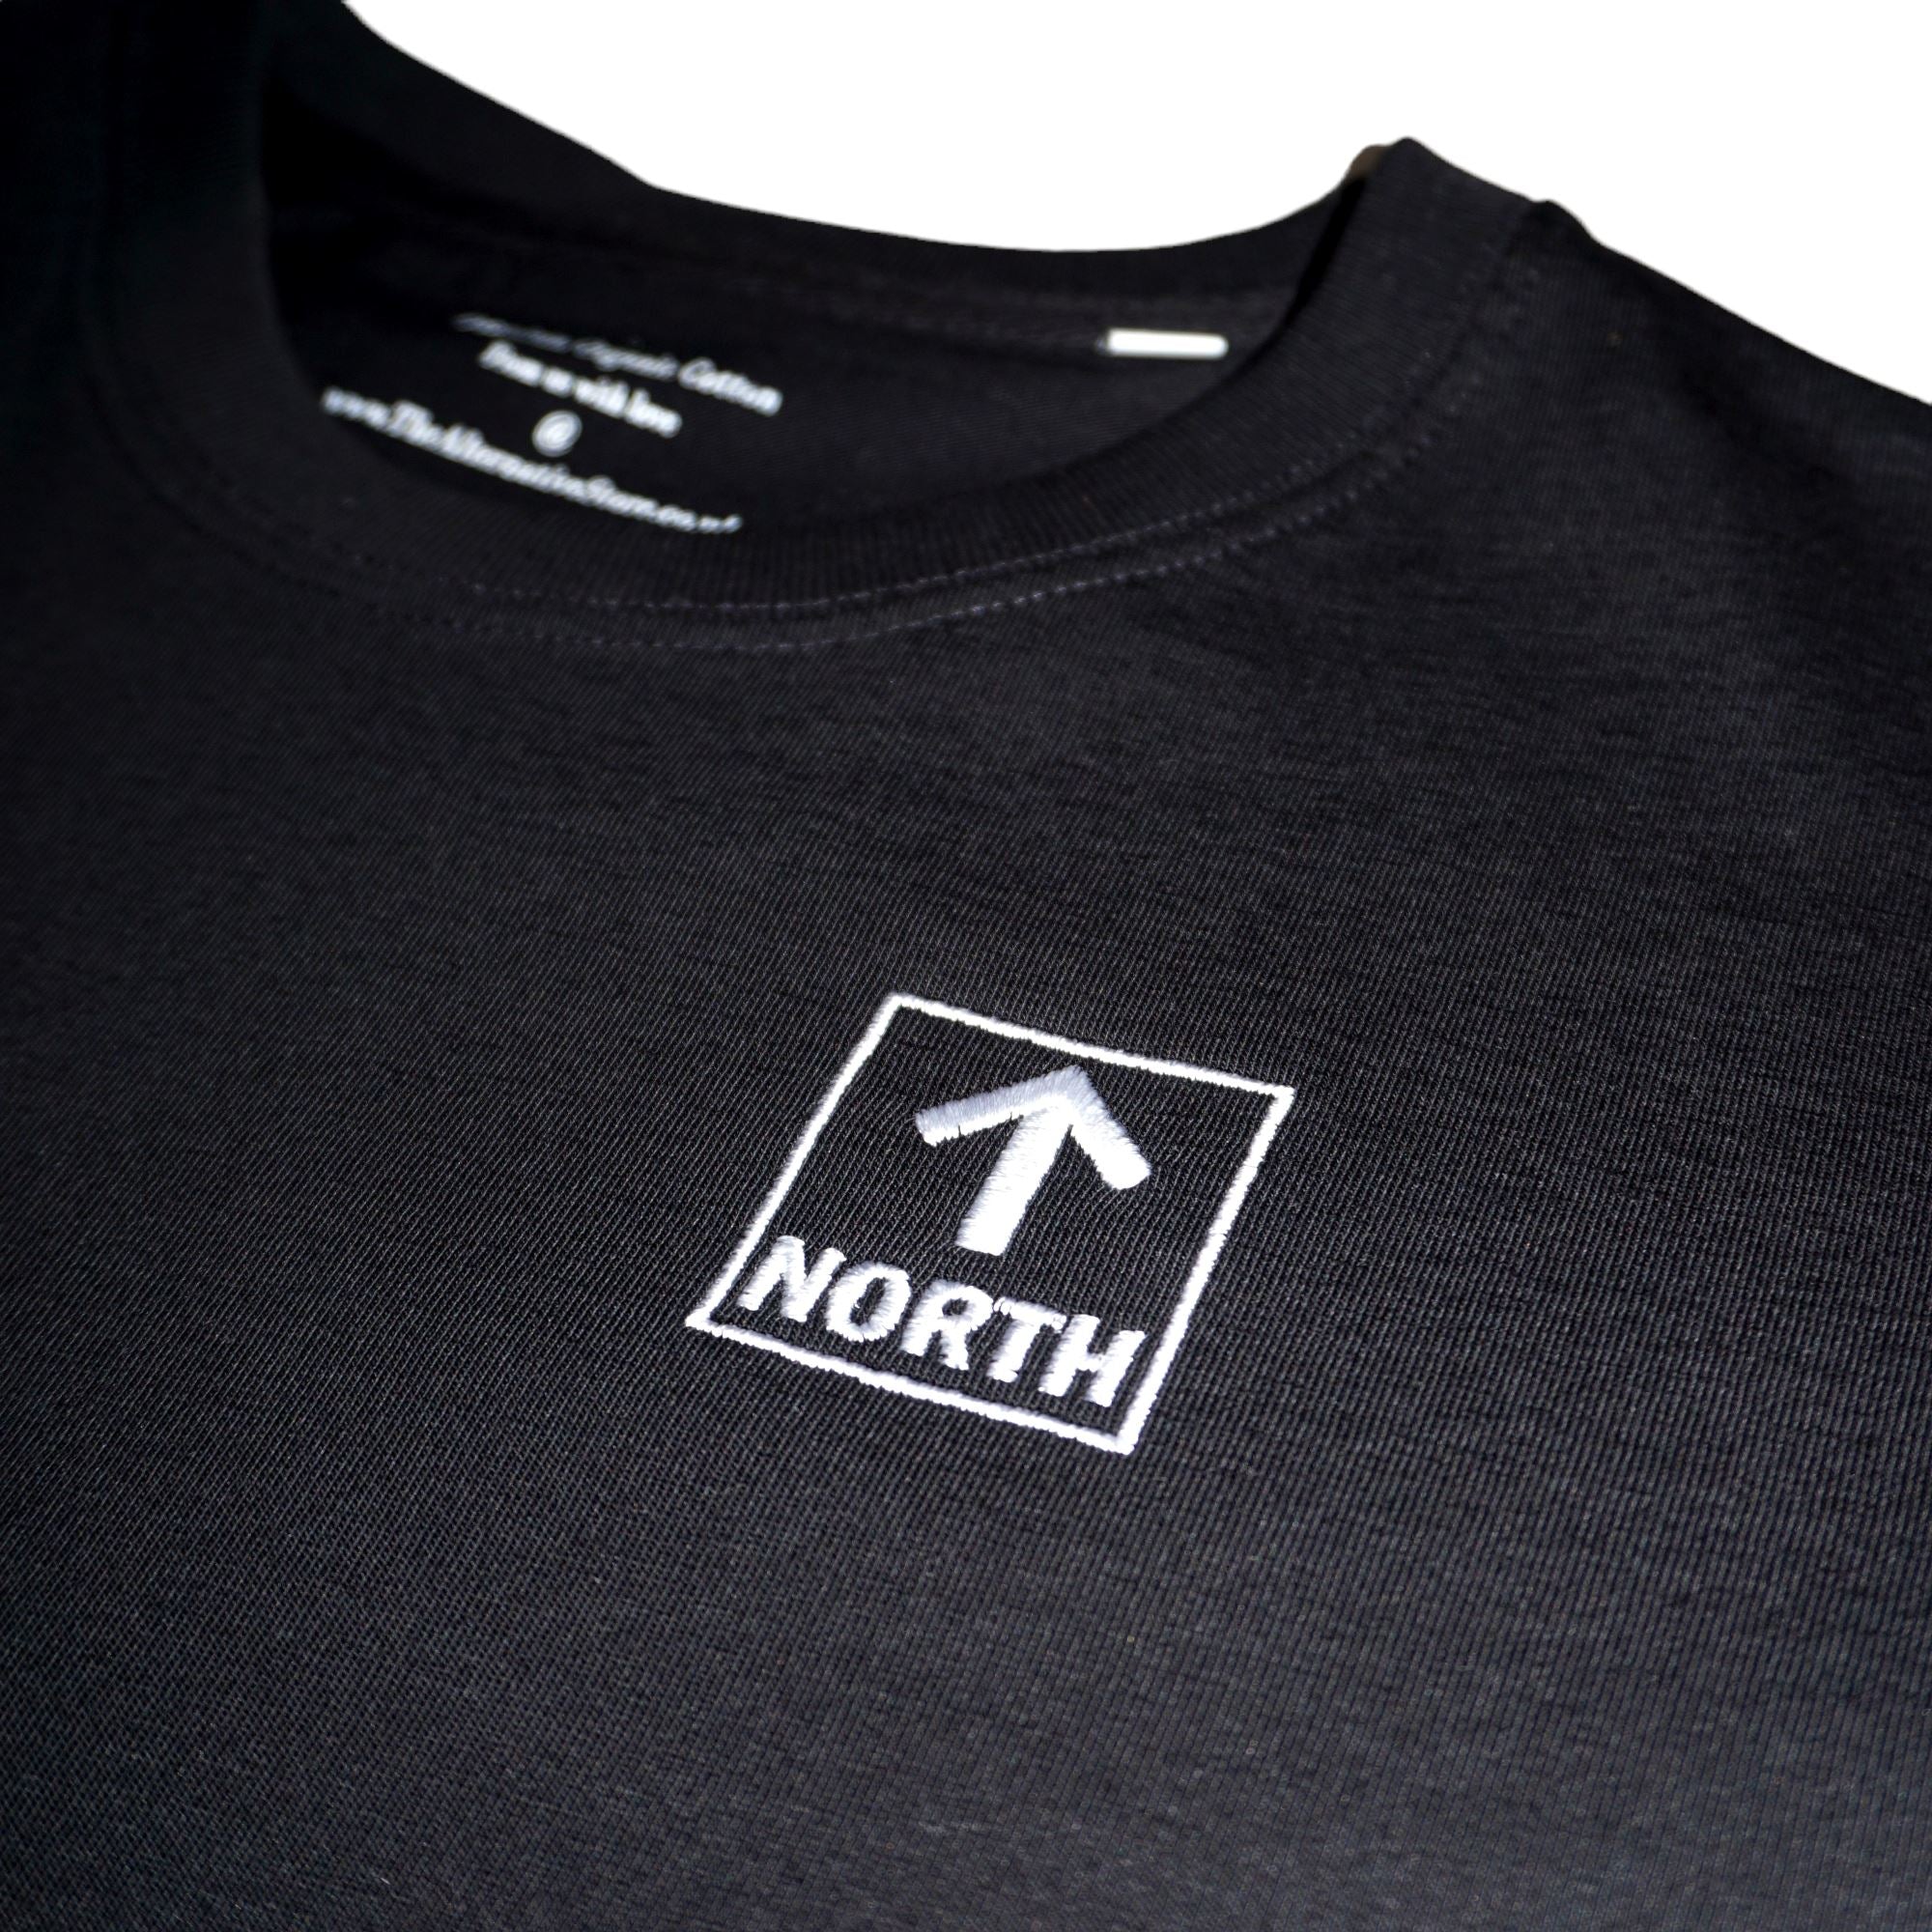 North T-Shirt T Shirt The Alternative Store 